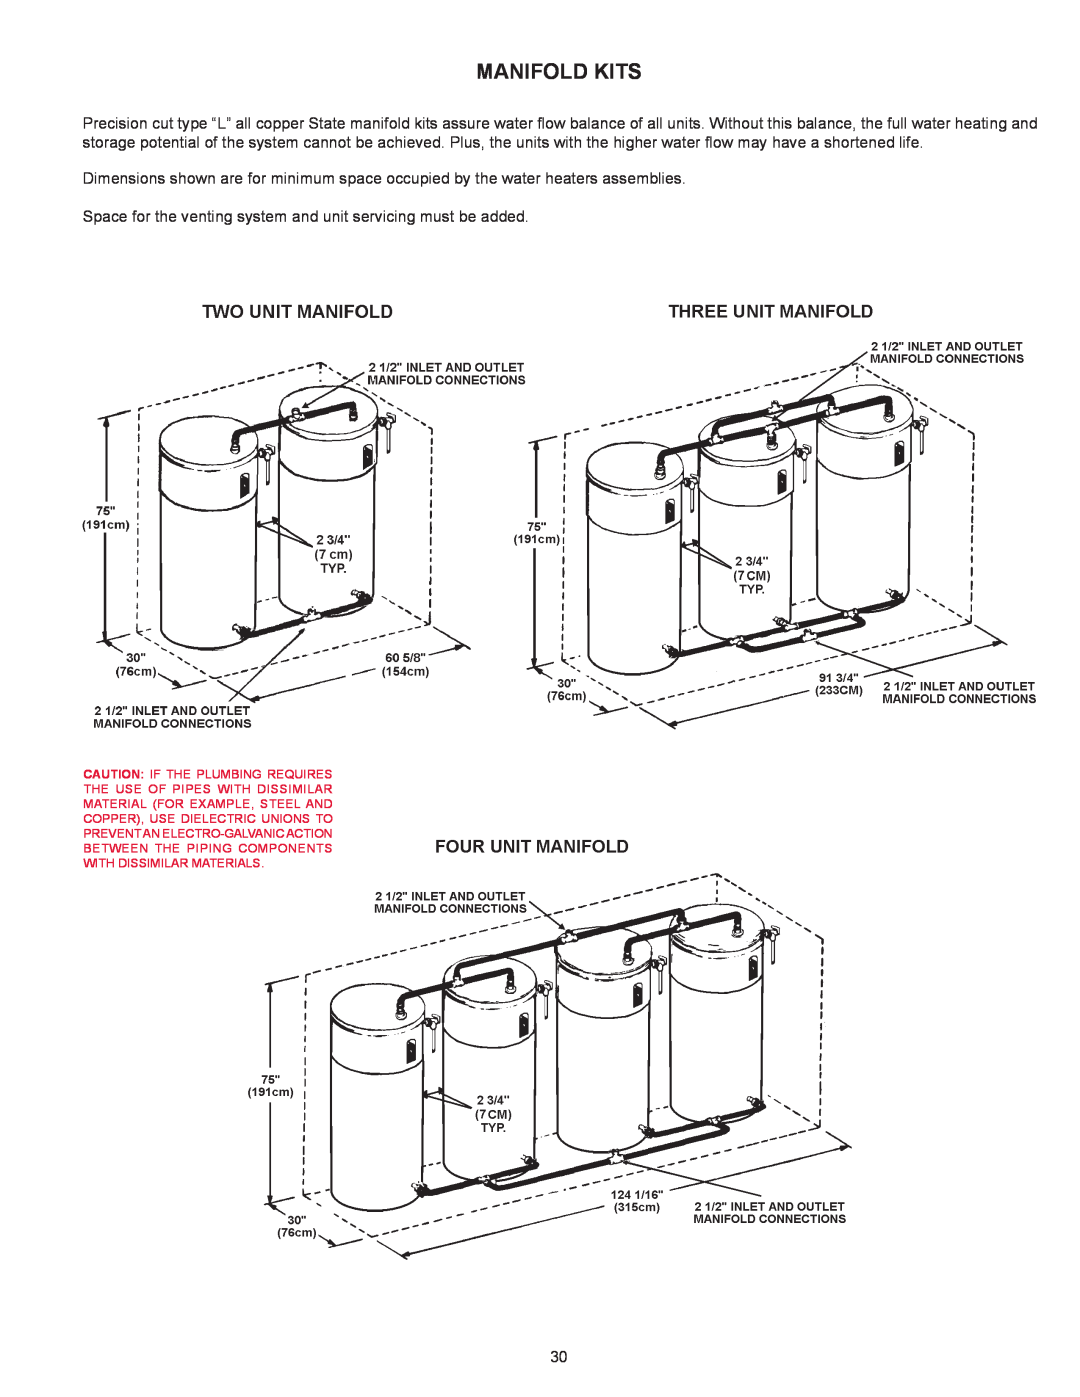 Reliance Water Heaters RUF 100 199 SERIES 101, RUF 100 199 SERIES 100 warranty Manifold Kits 